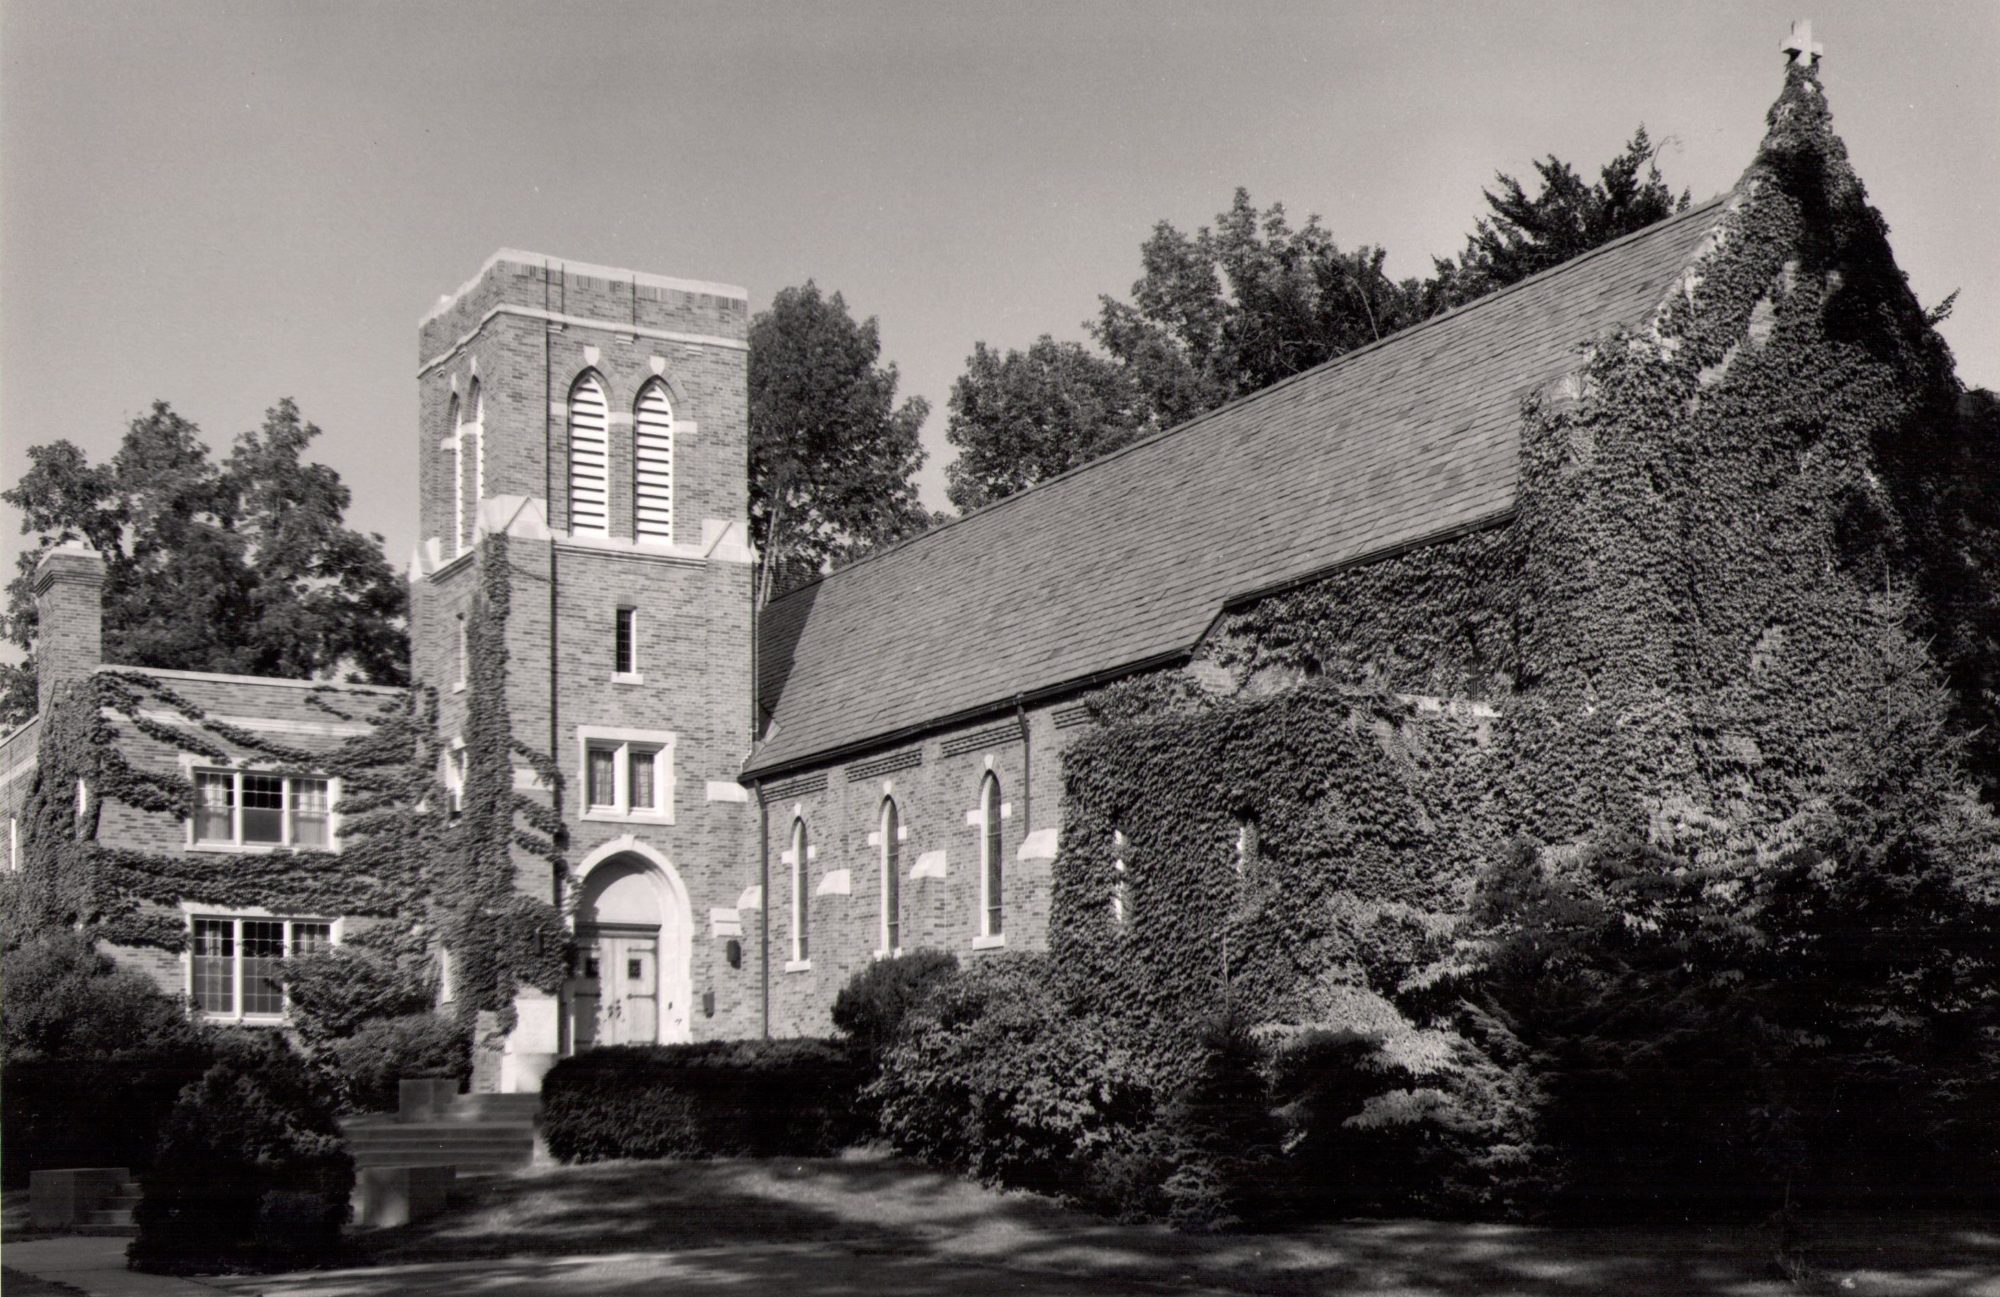 University Lutheran Chapel Ann Arbor Alumni Association